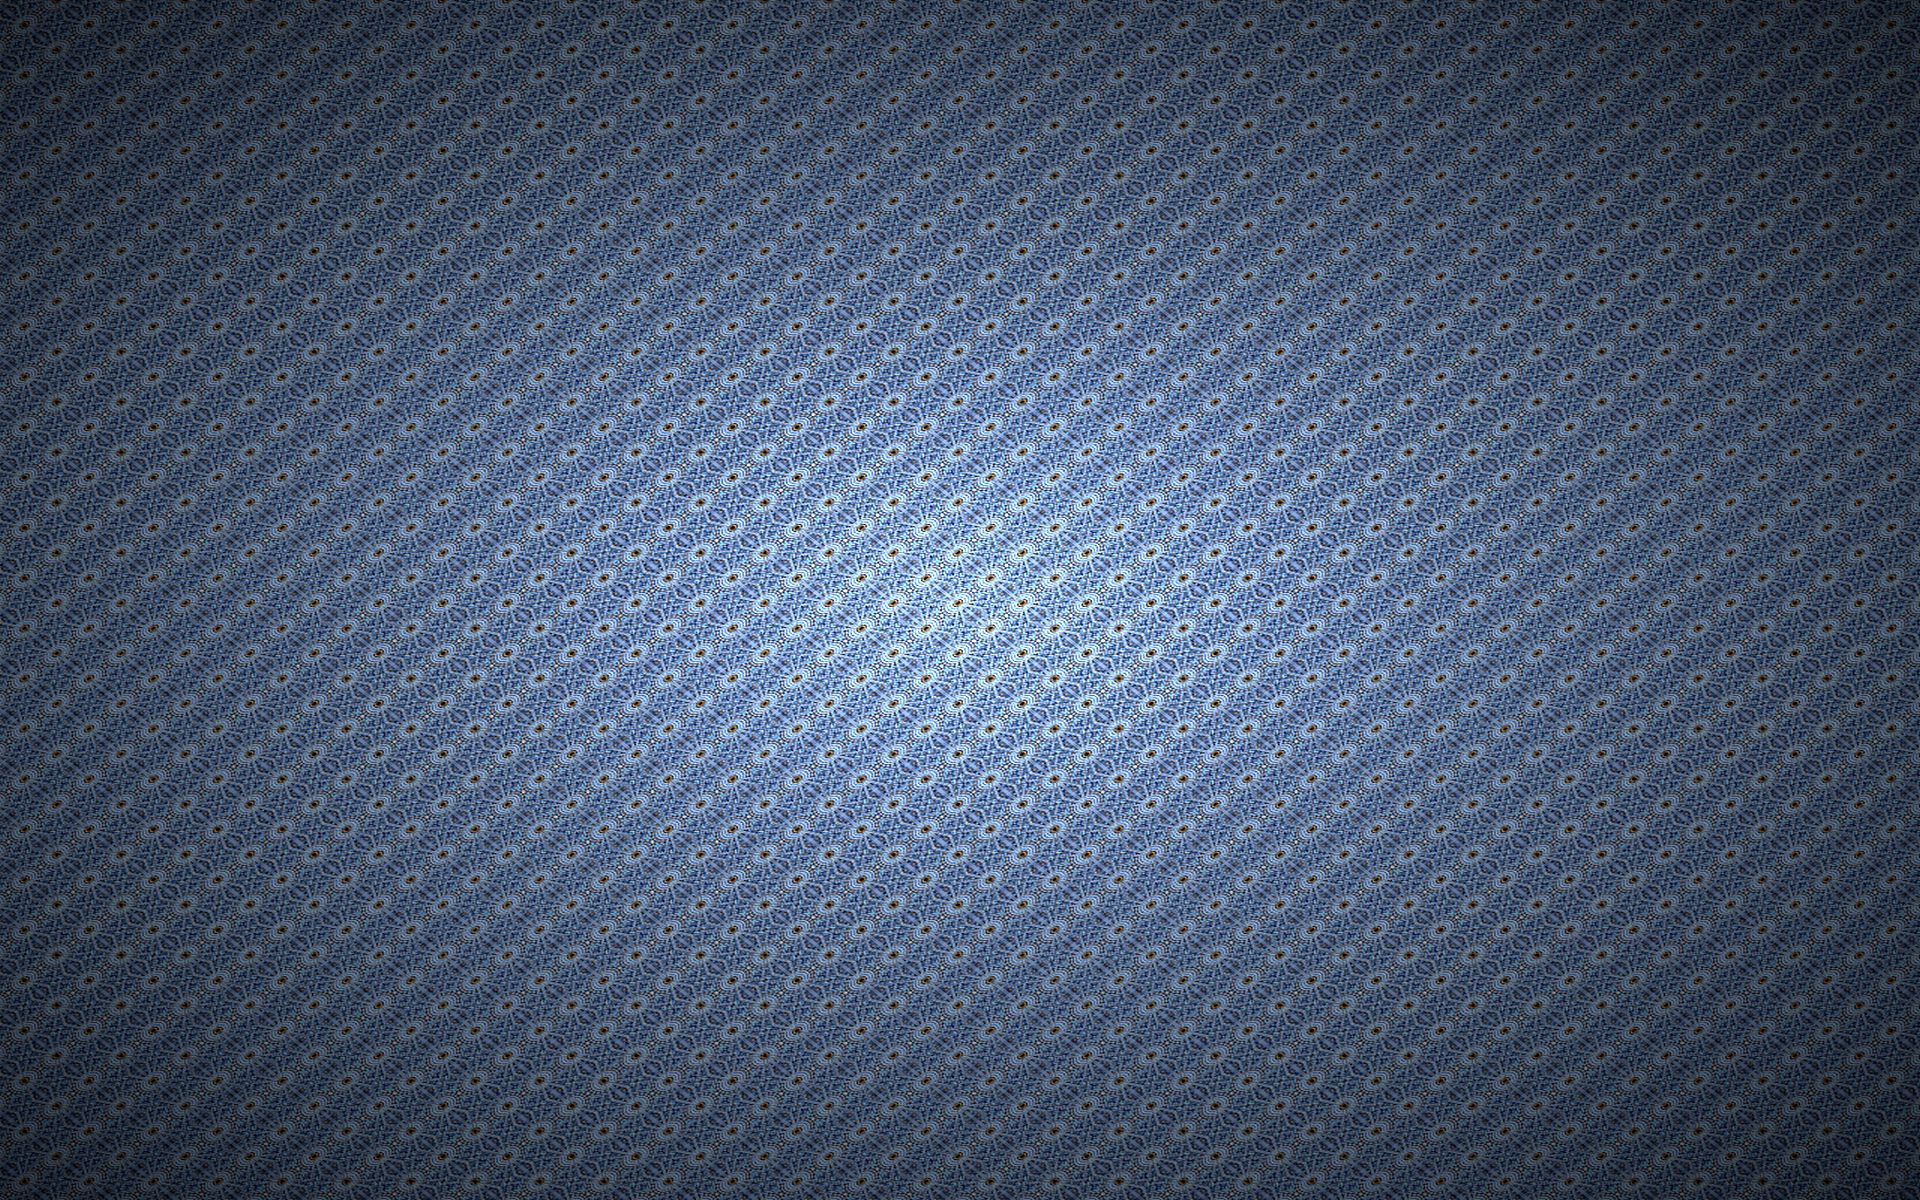 Spots 4K Wallpaper